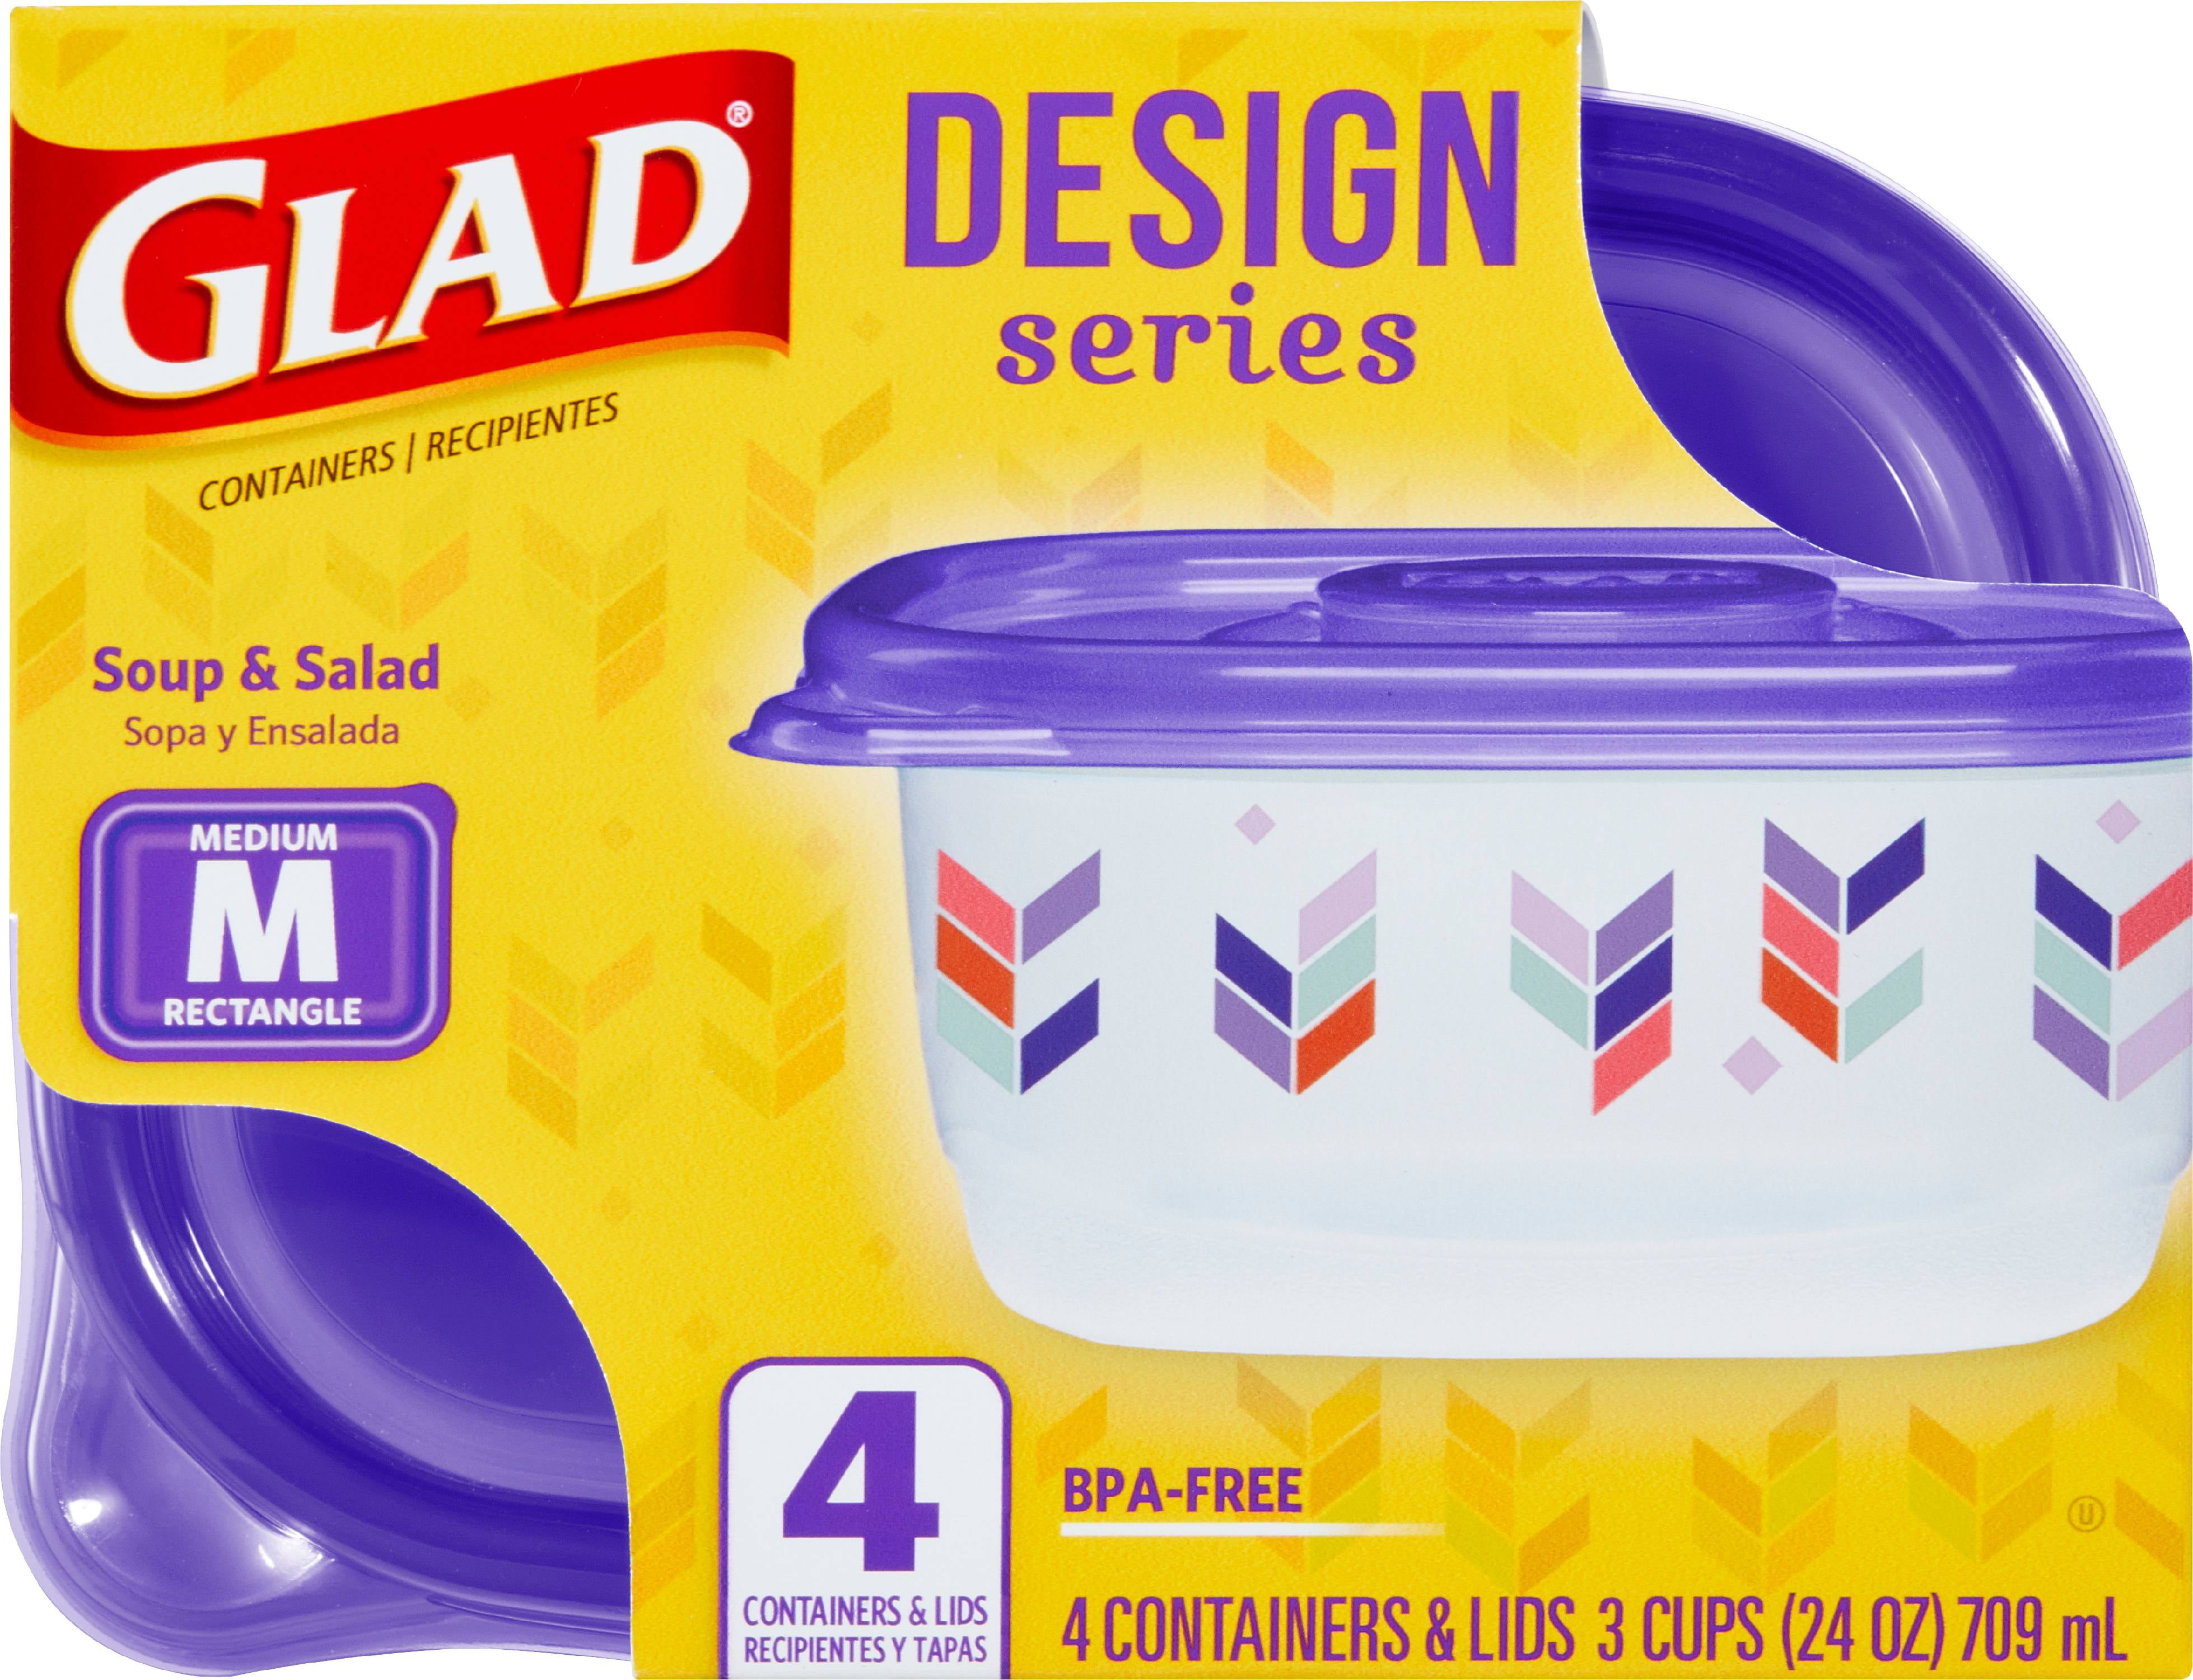 Details about   1 Glad Designer Series 4 Medium Rectangular 24oz Containers & Lids BPA Free RARE 